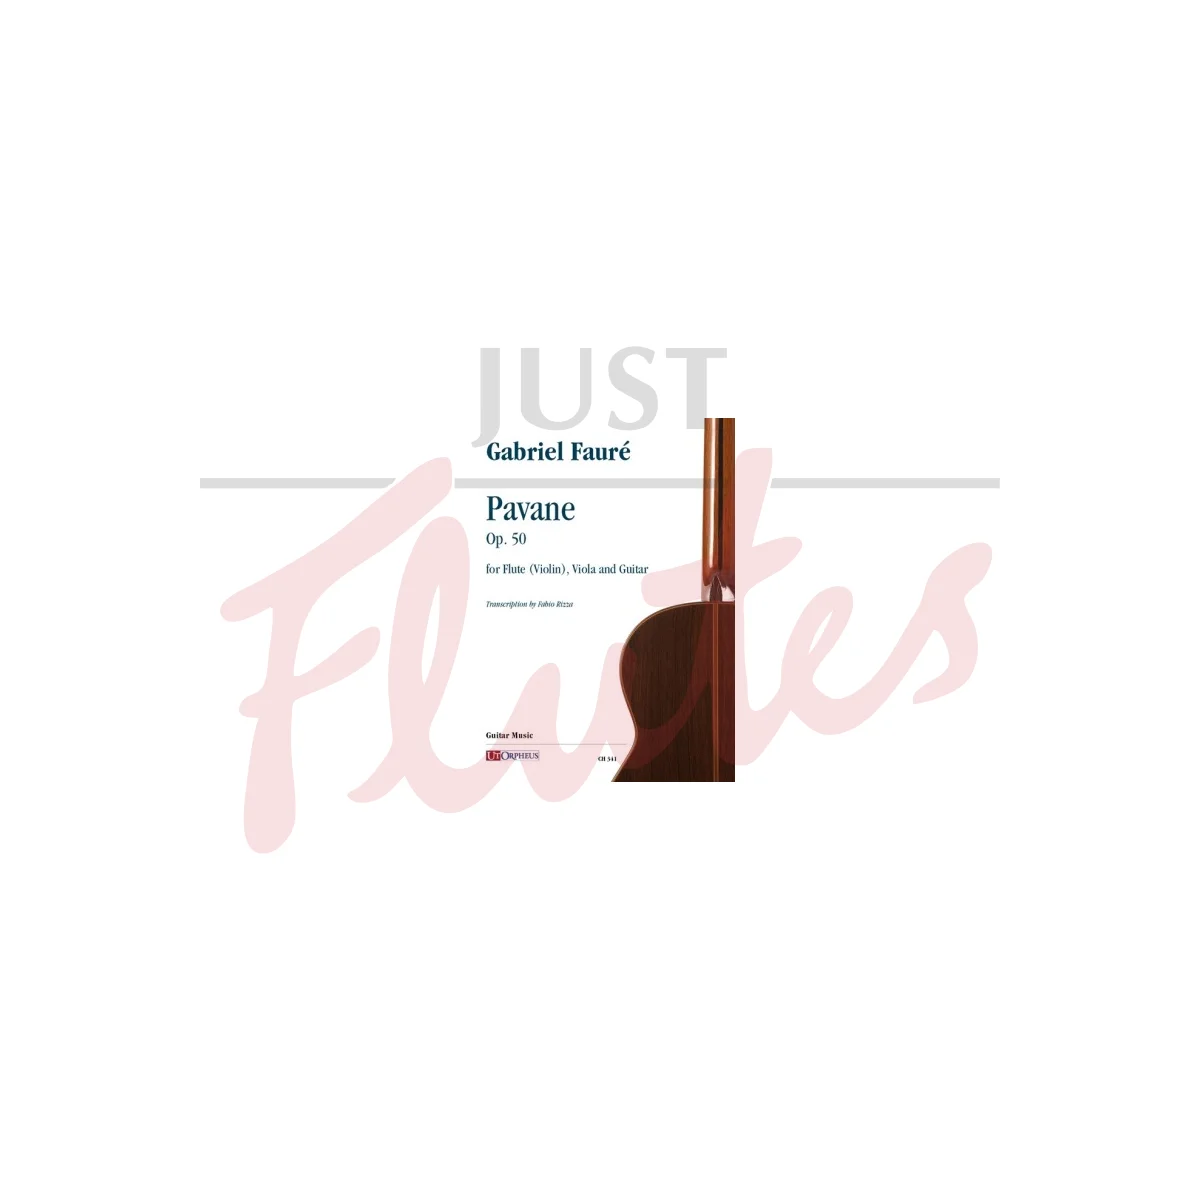 Pavane for Flute, Viola and Guitar